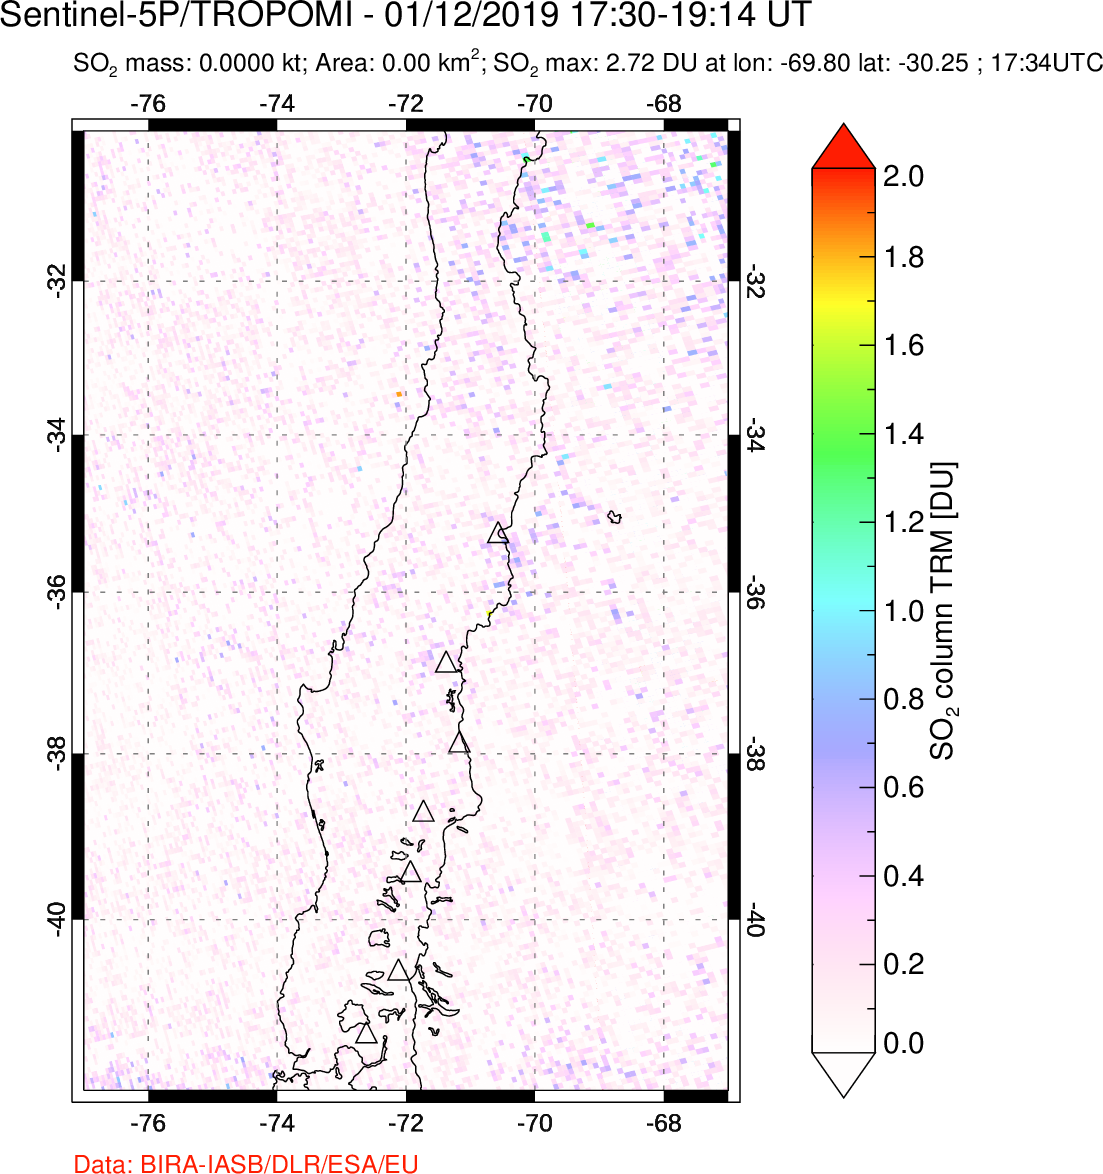 A sulfur dioxide image over Central Chile on Jan 12, 2019.